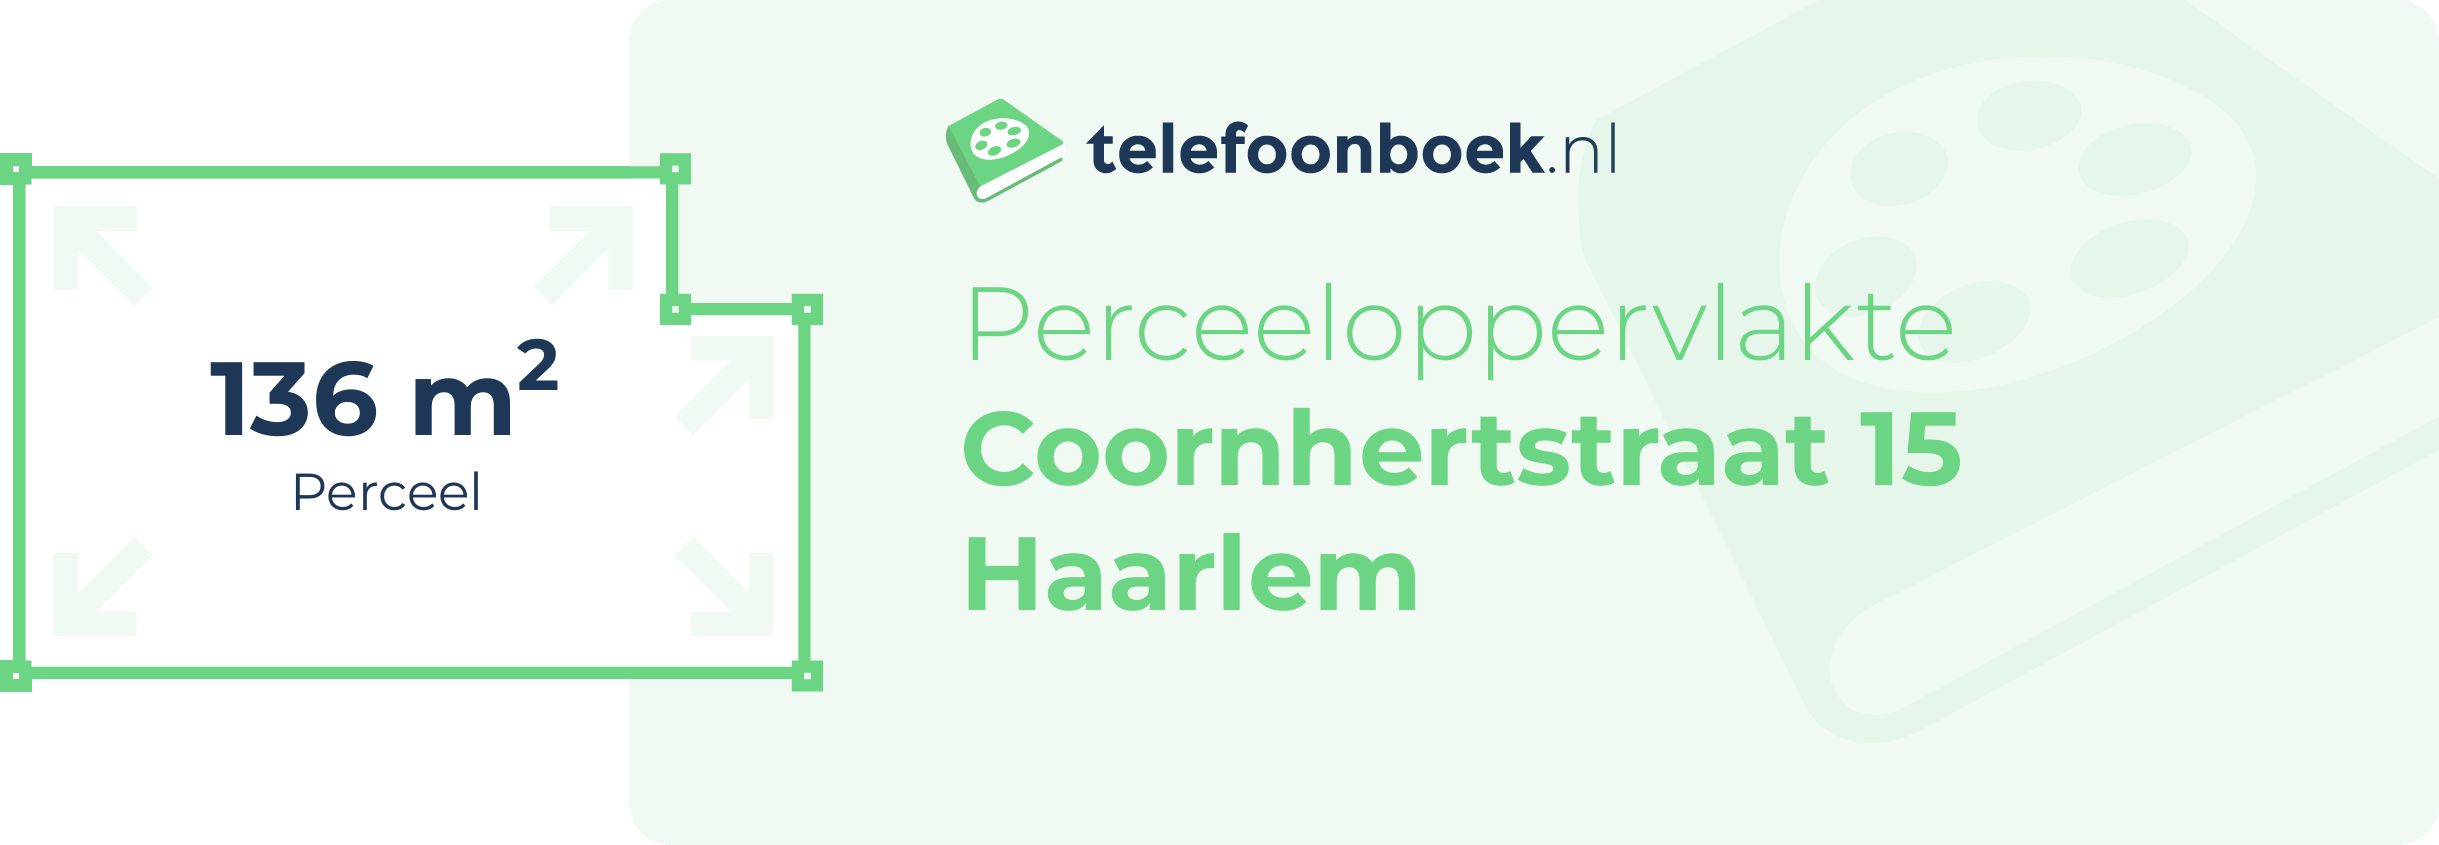 Perceeloppervlakte Coornhertstraat 15 Haarlem